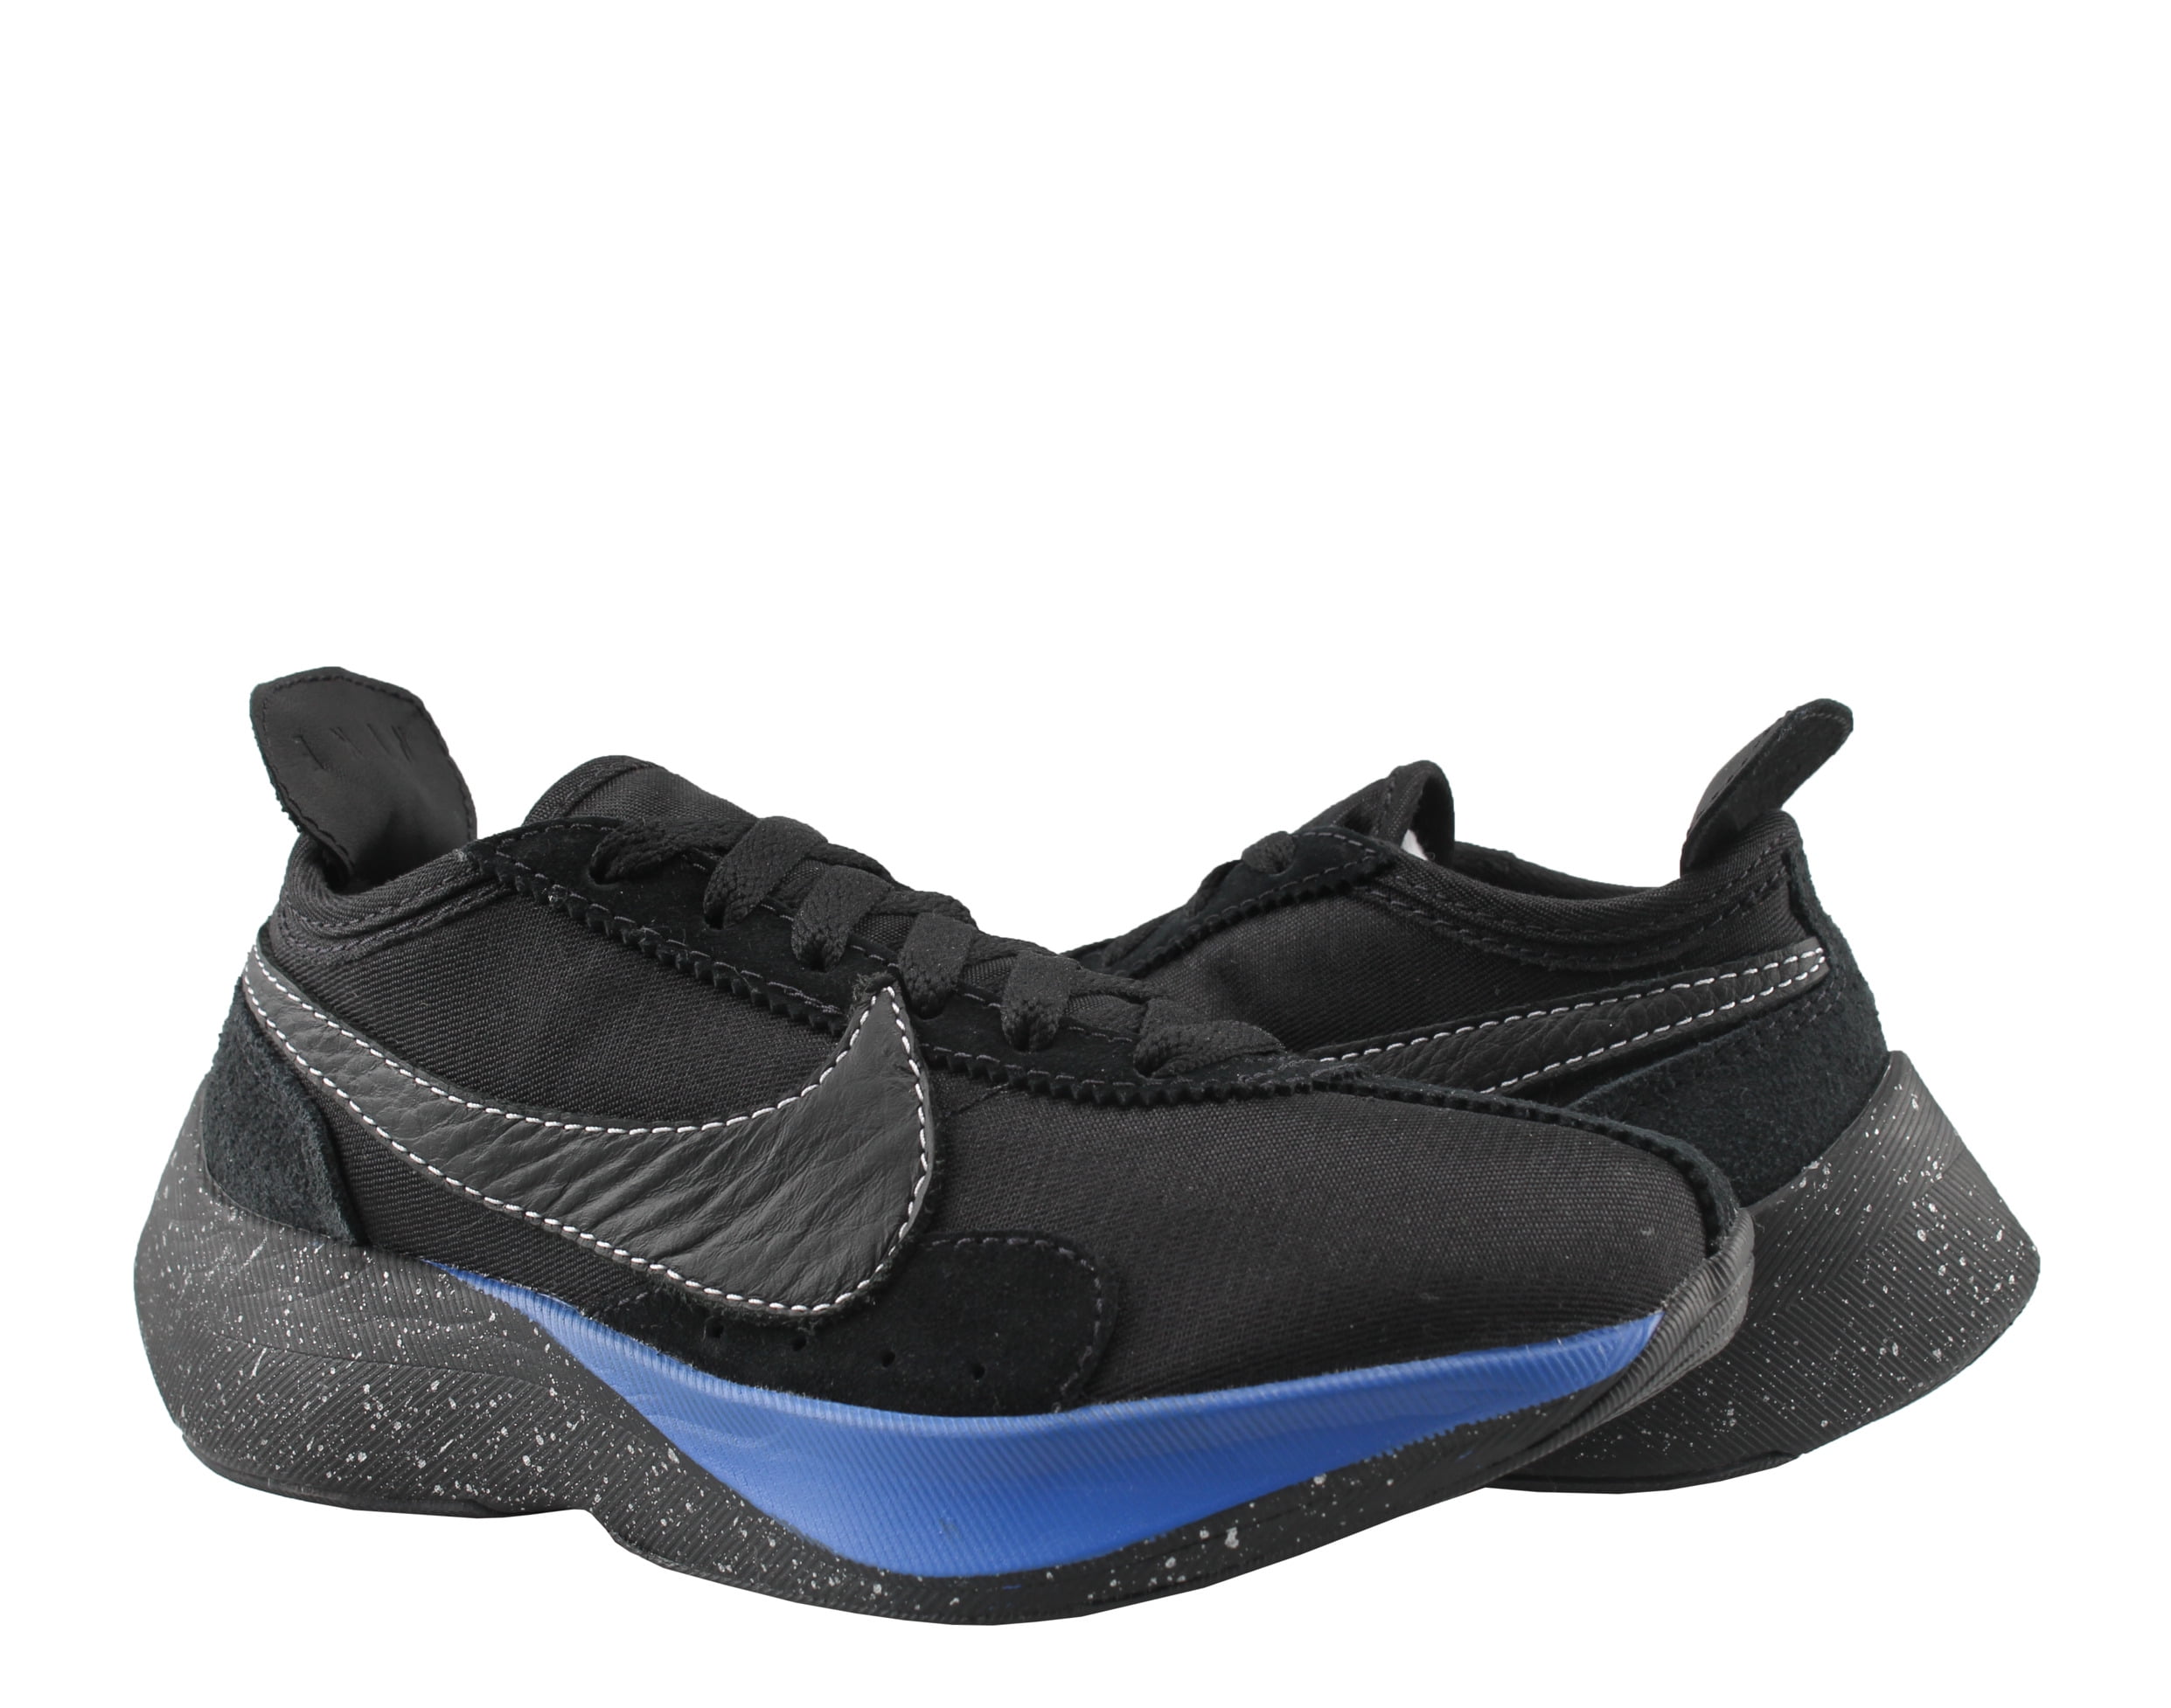 Inconsistente Decir a un lado Derivación Nike Moon Racer QS Men's Running Shoes Size 13 - Walmart.com